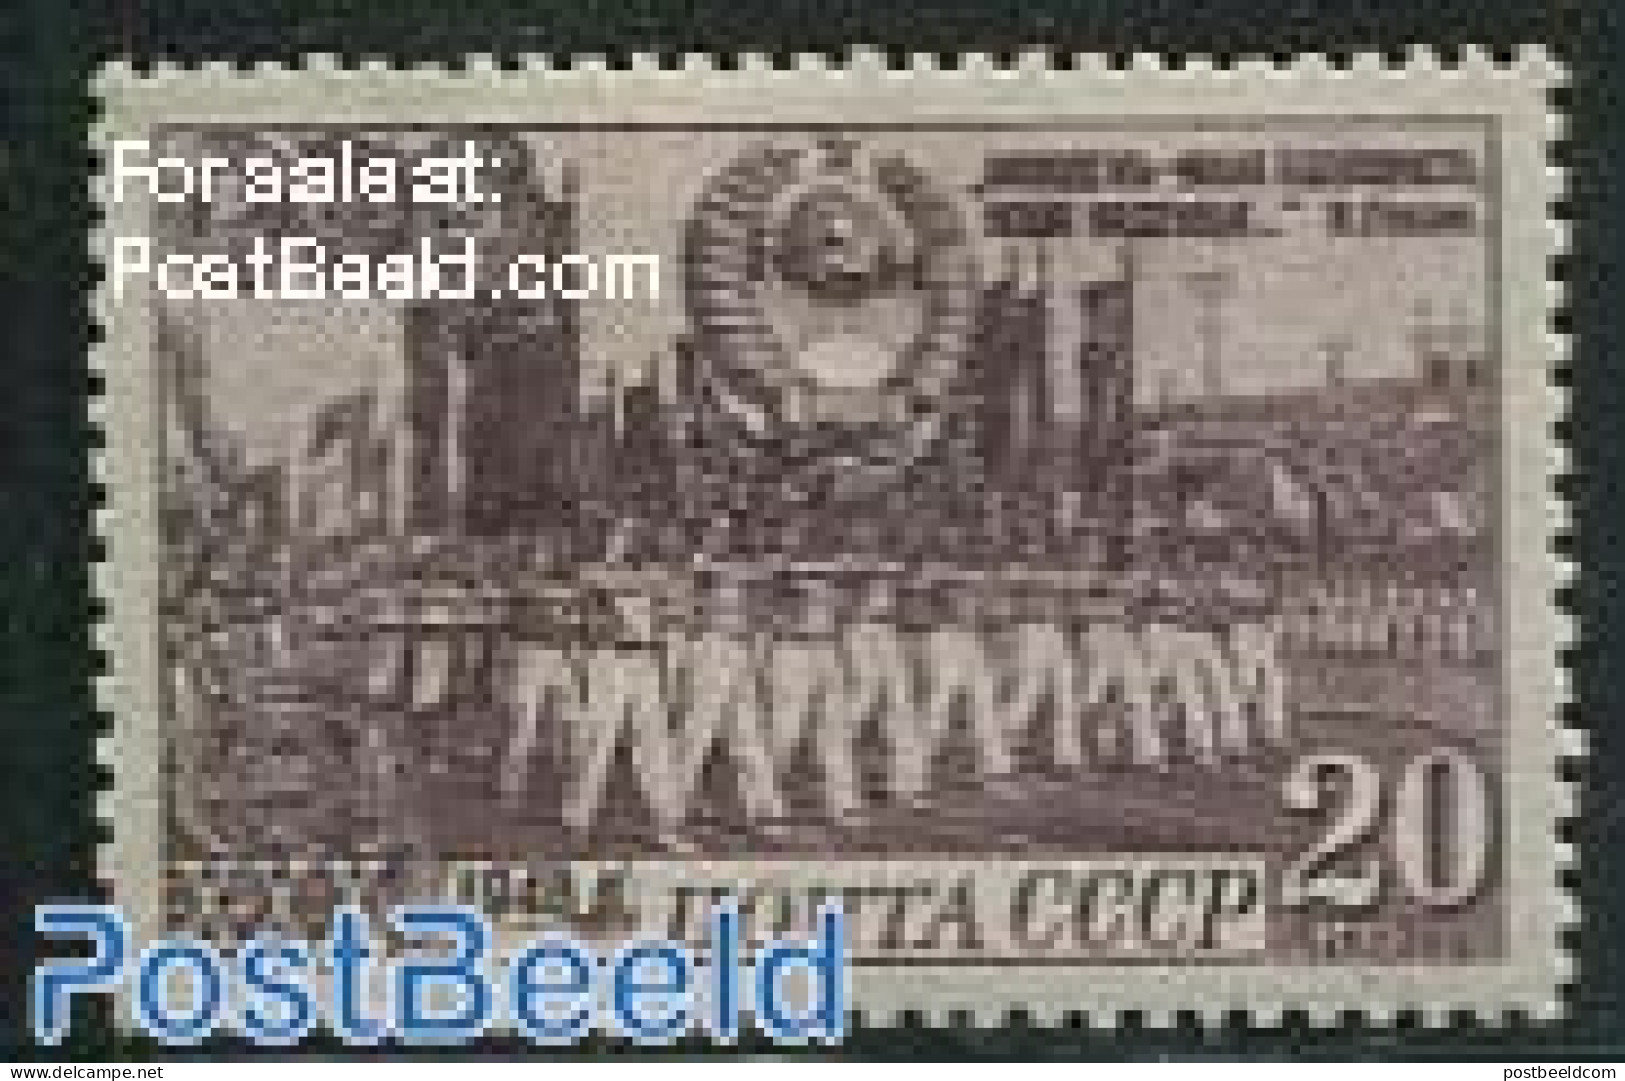 Russia, Soviet Union 1948 20K, Stamp Out Of Set, Mint NH - Ongebruikt